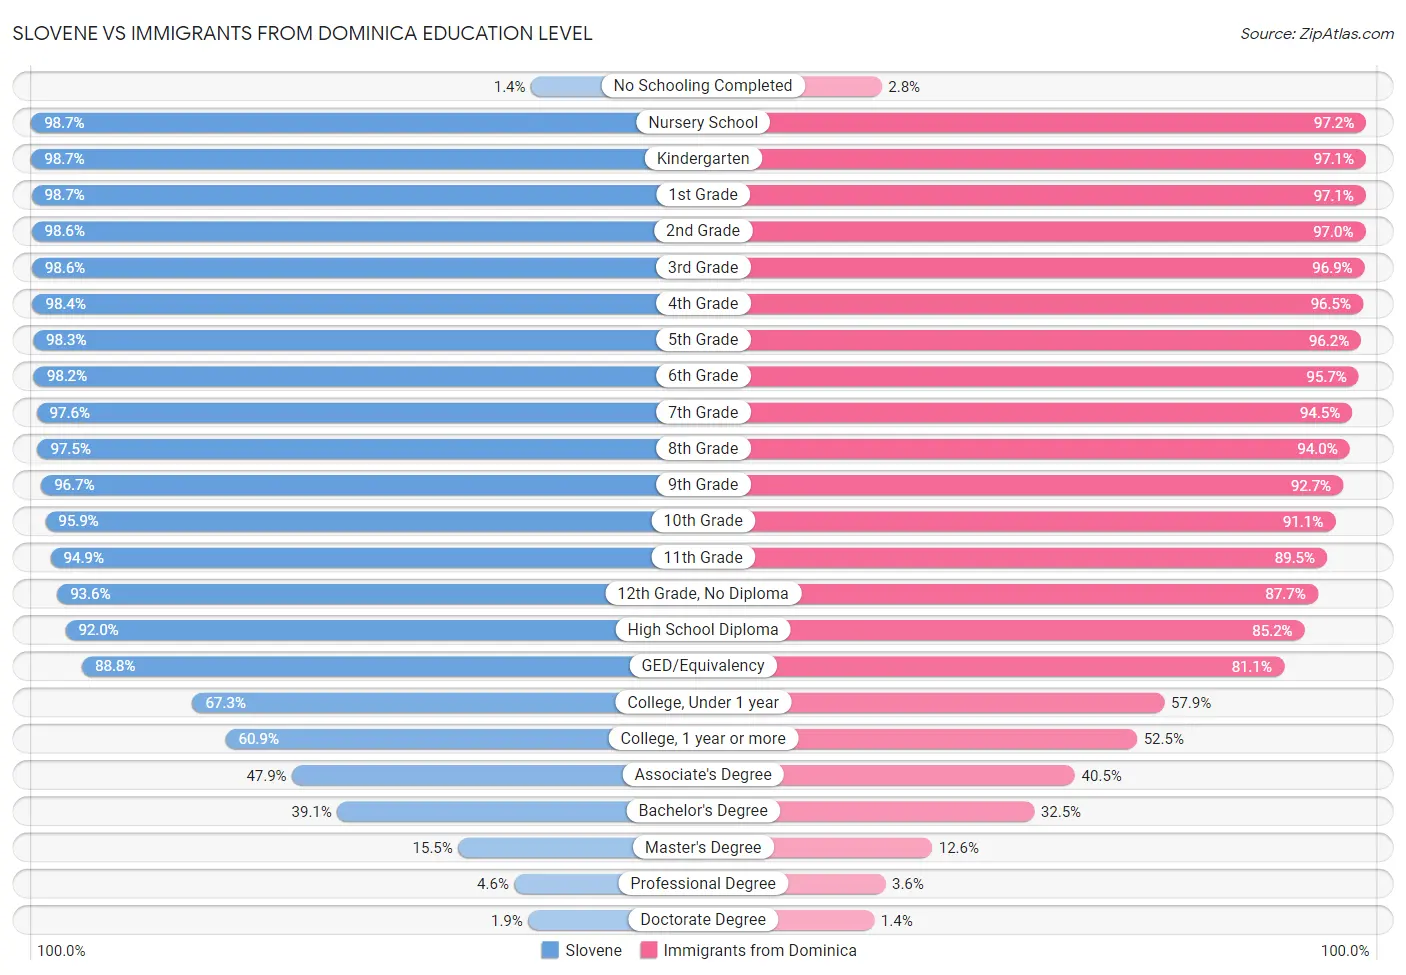 Slovene vs Immigrants from Dominica Education Level